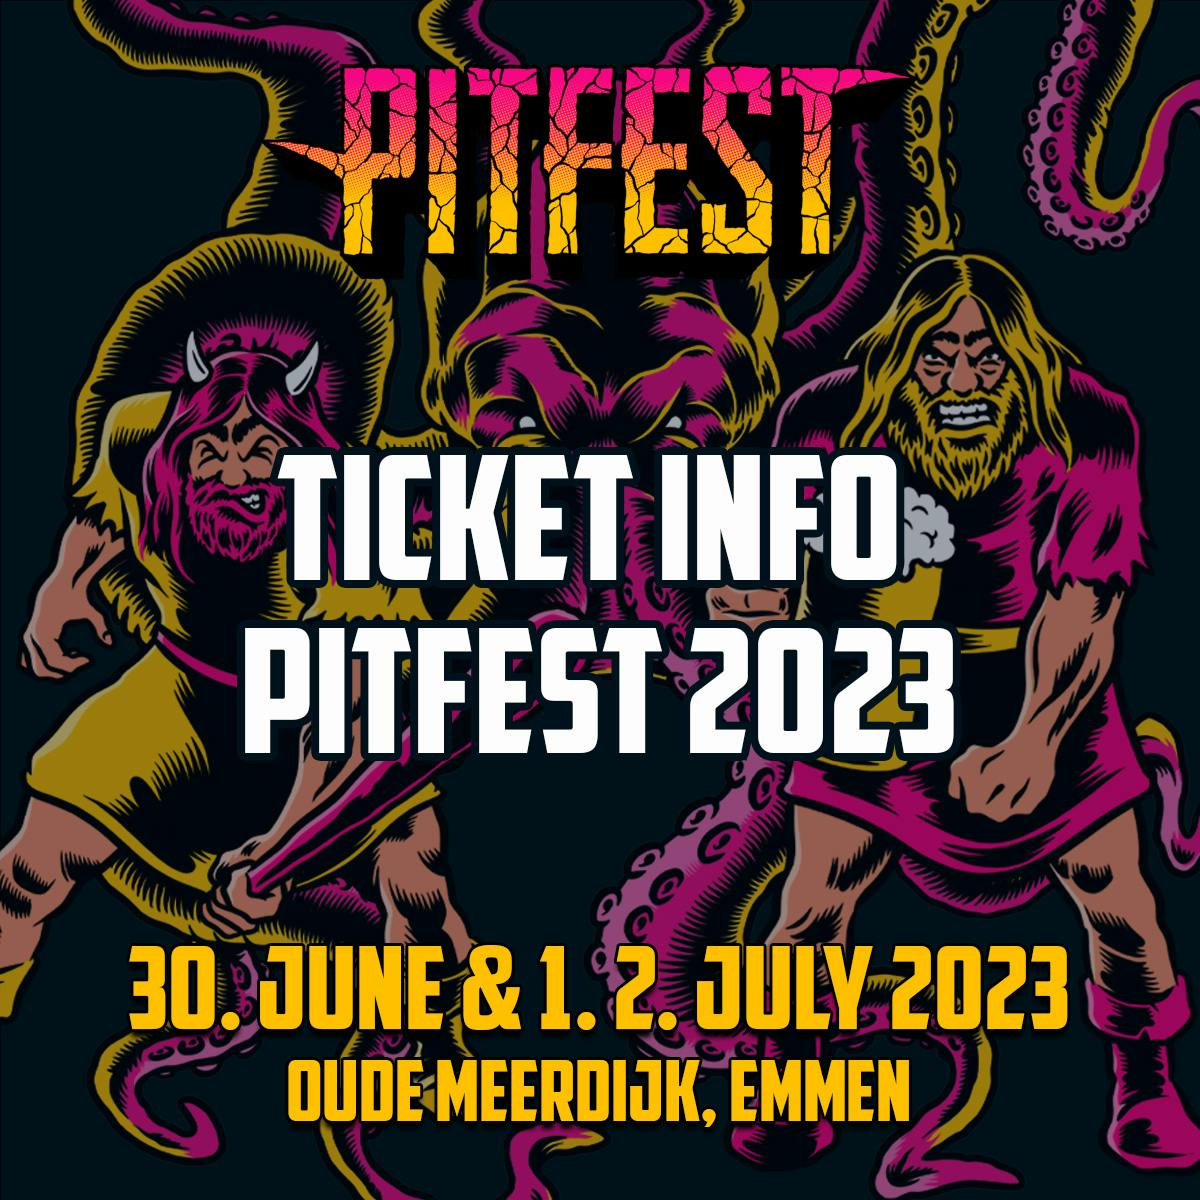 Ticket info Pitfest 2023